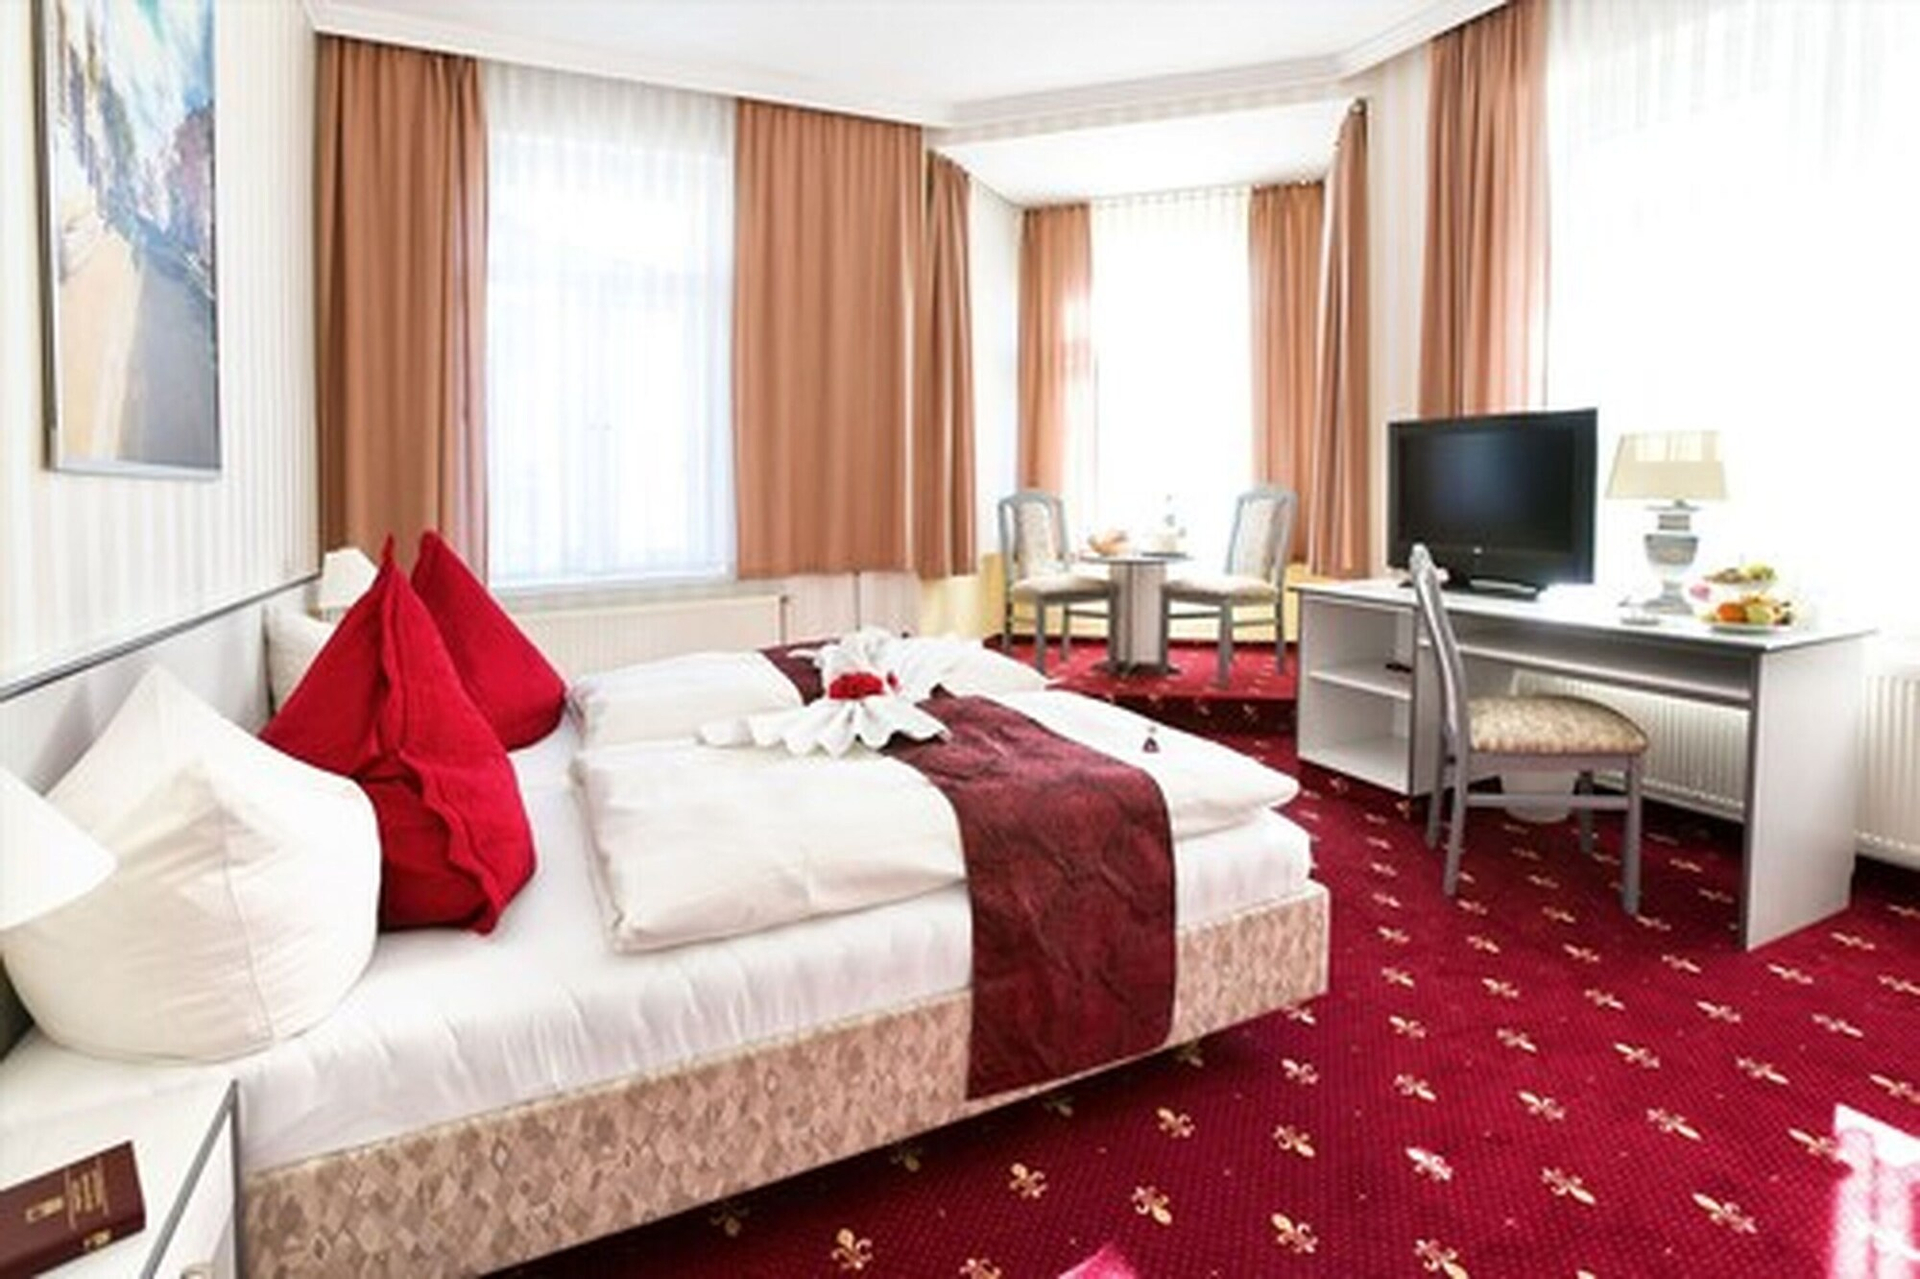 Bedroom 3, Parkhotel Meerane, Zwickau